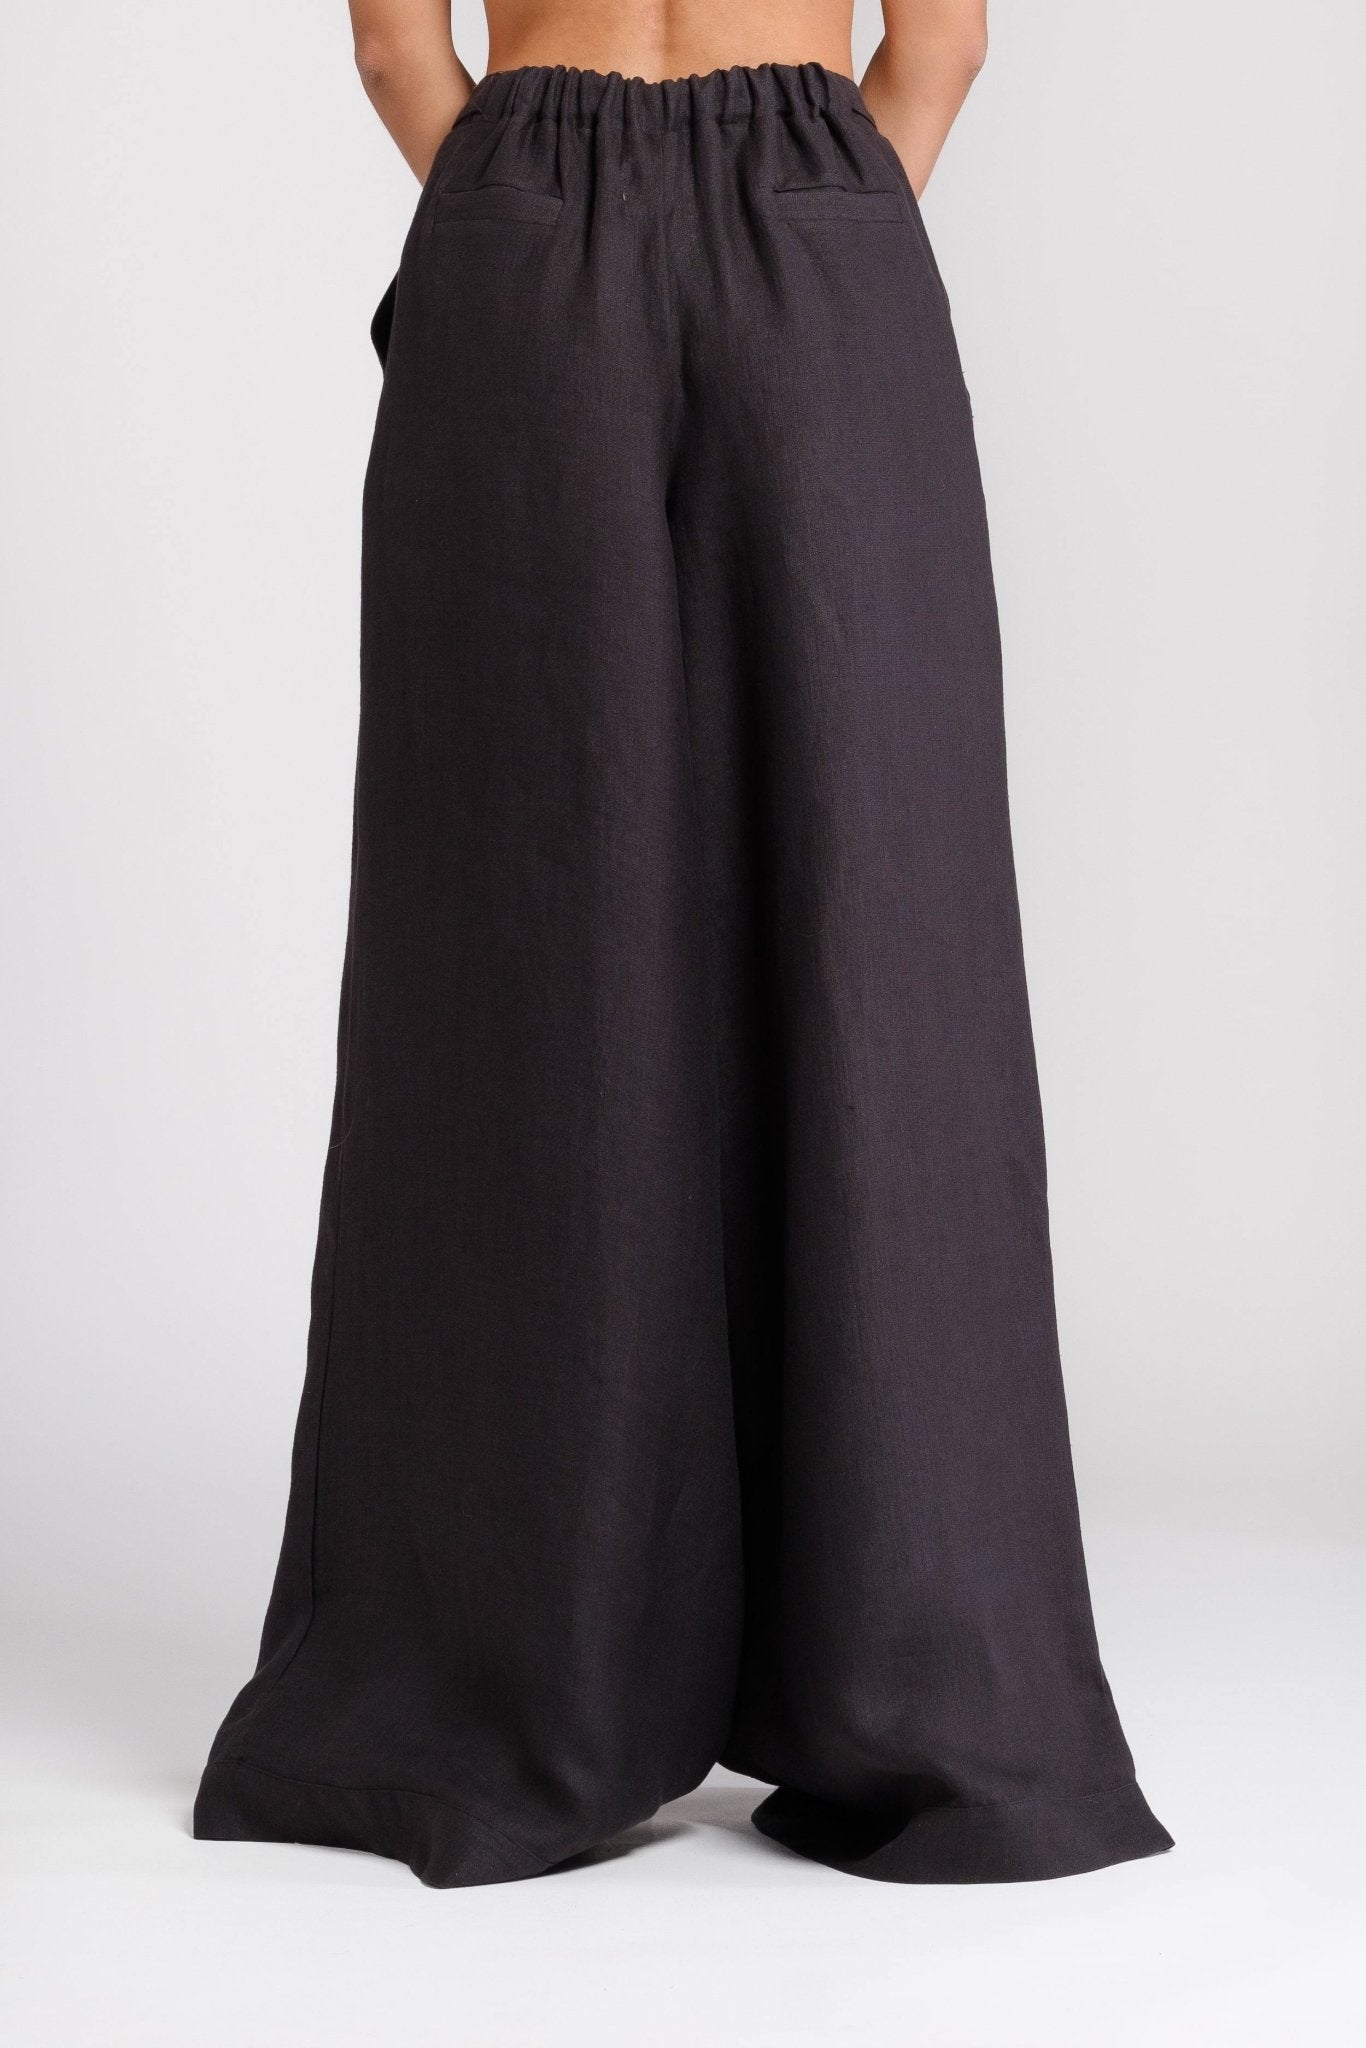 Black hemp palazzo trousers - The Clothing LoungeTrame di Stile